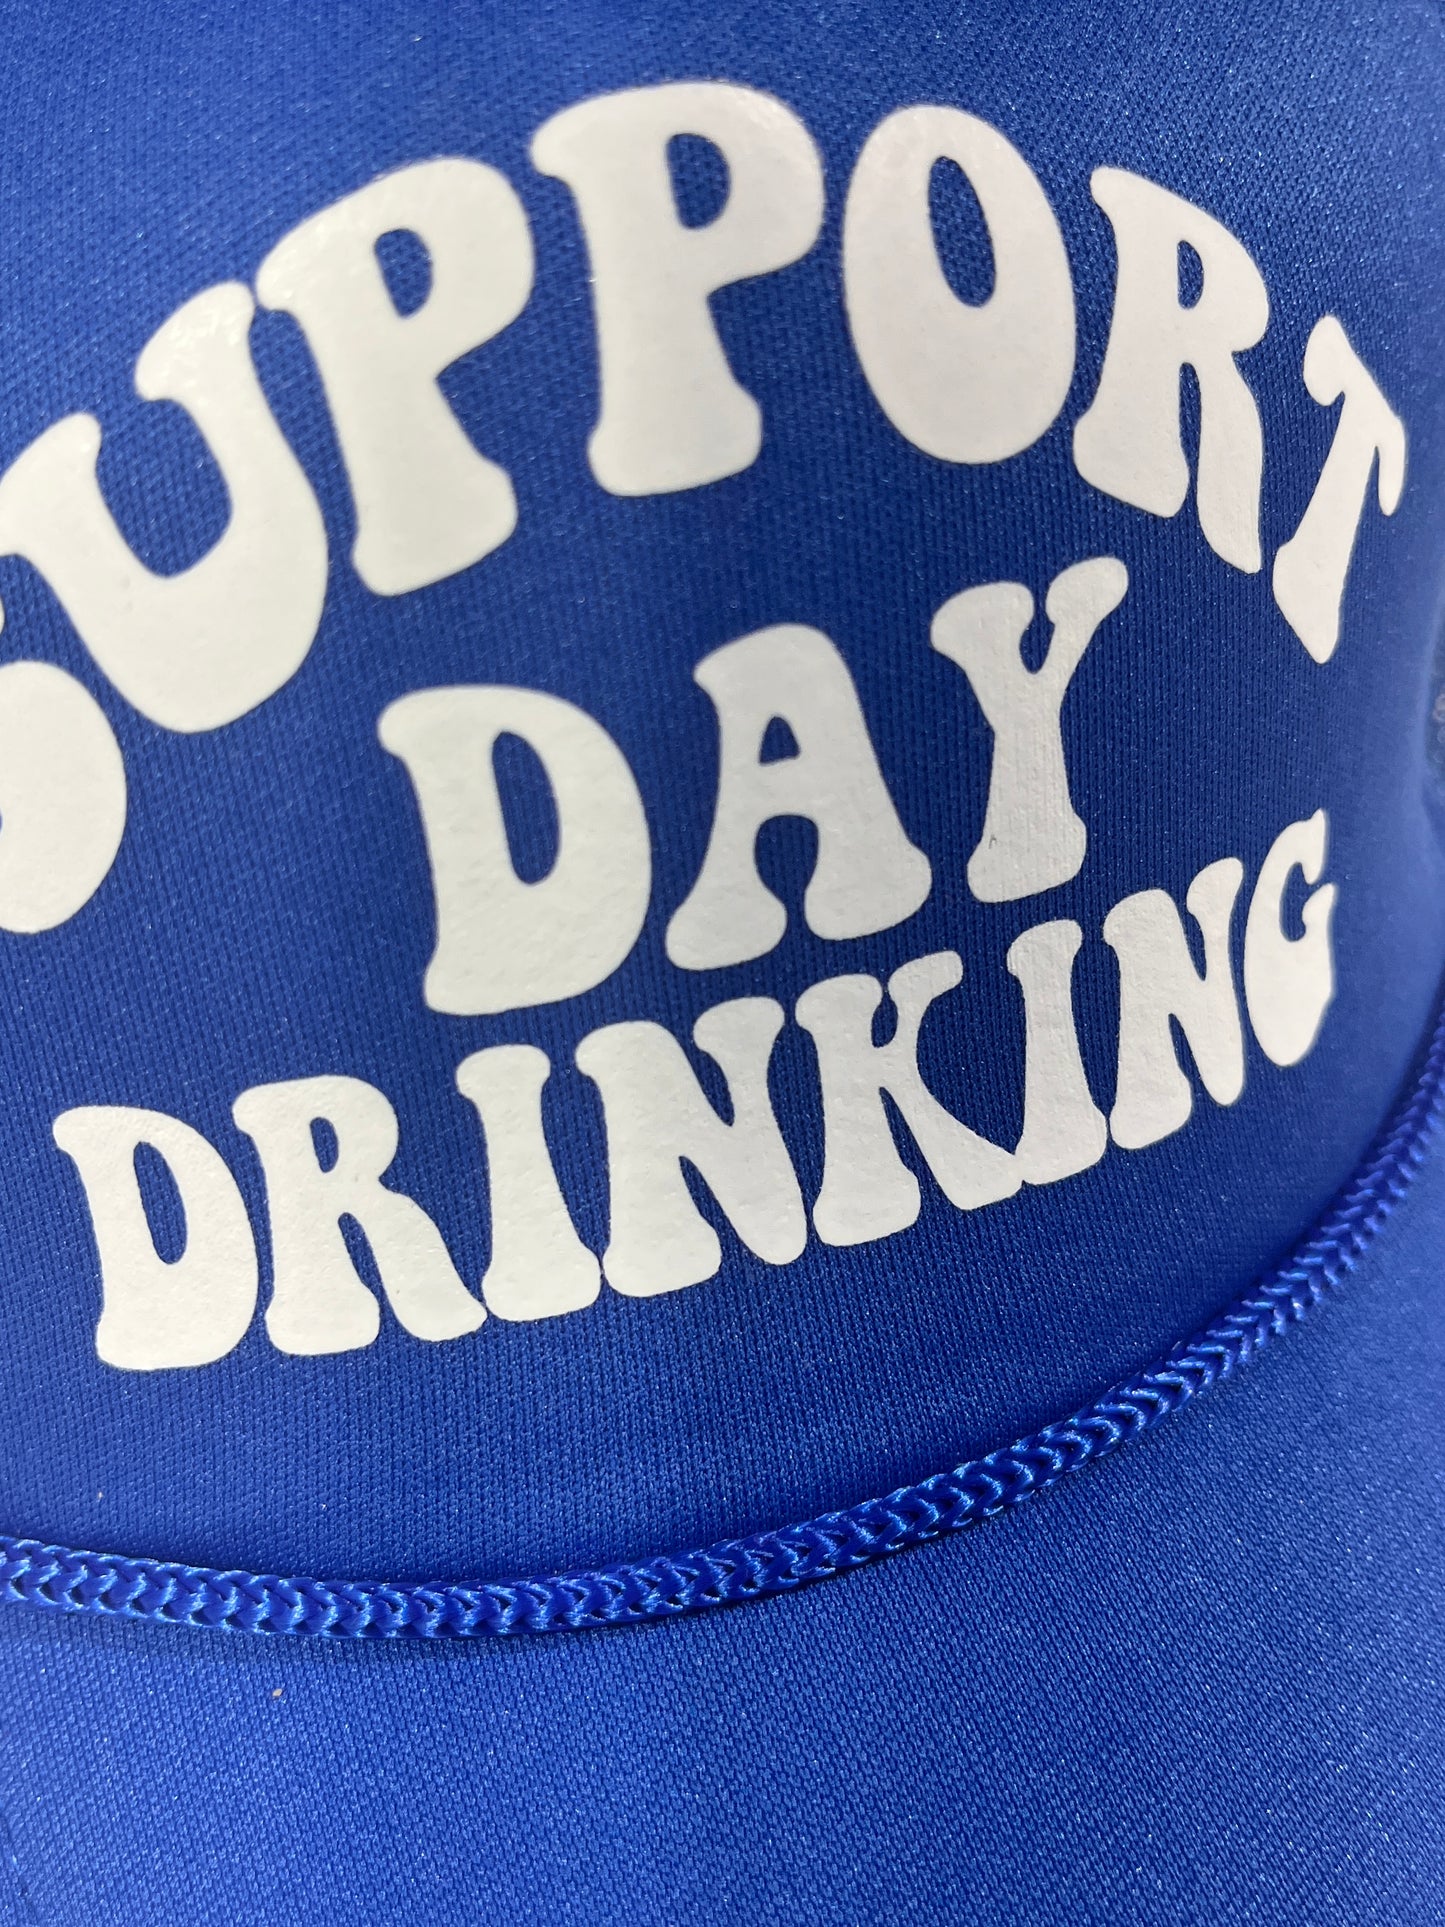 Vintage Day Drinking Hat